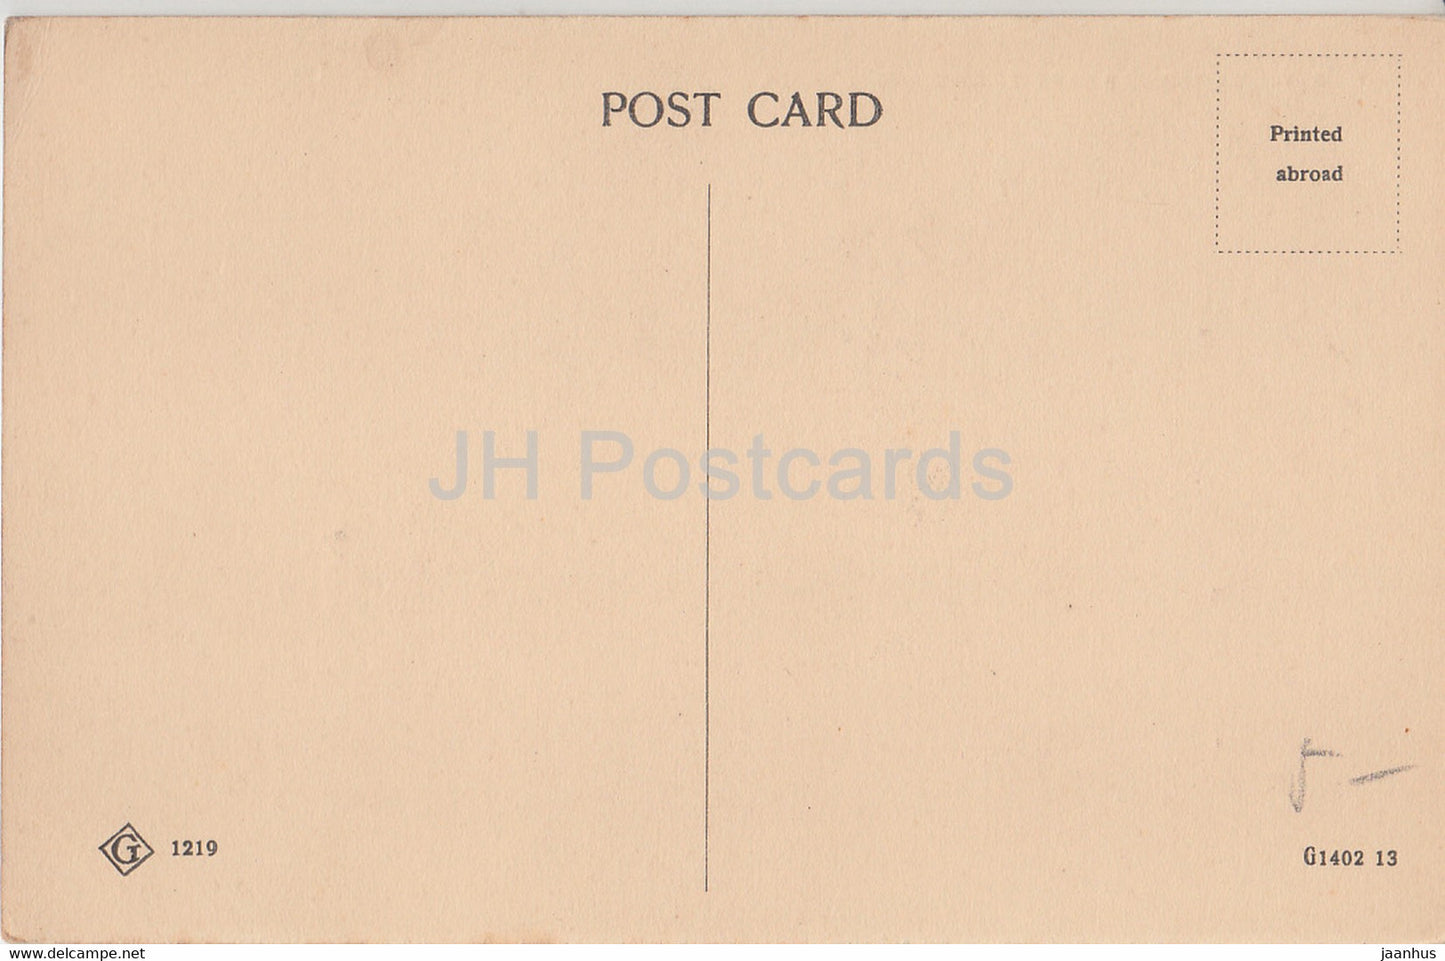 London - Bank of England & Royal Exchange - cars - 1219 - old postcard - England - United Kingdom - unused